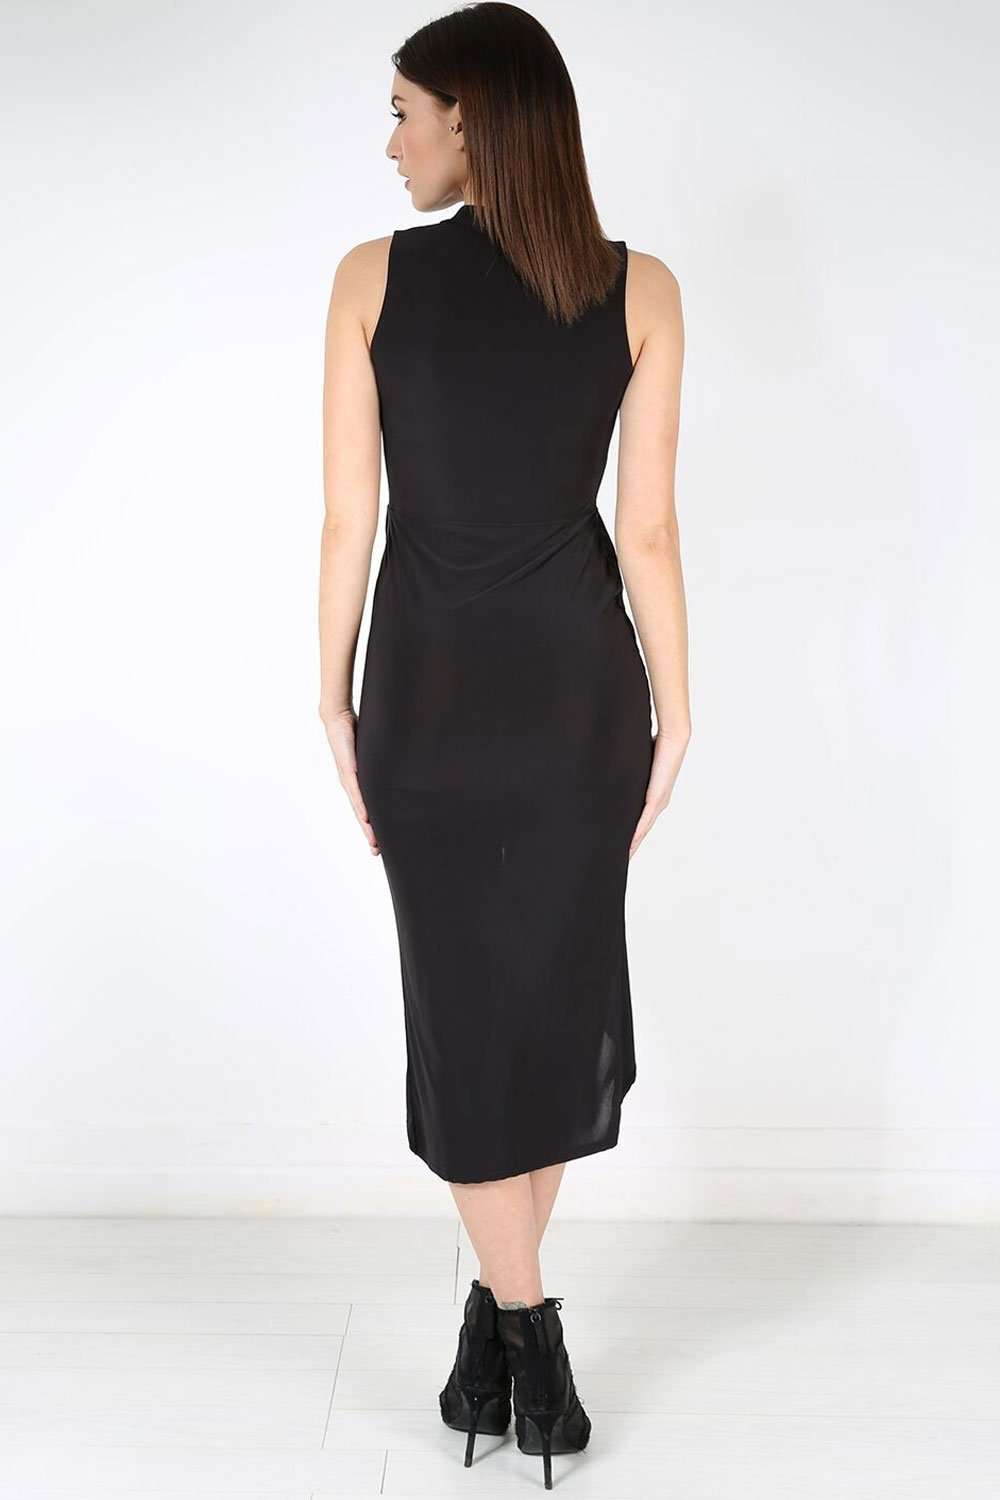 Sleeveless Black Midaxi Wrap Dress - bejealous-com